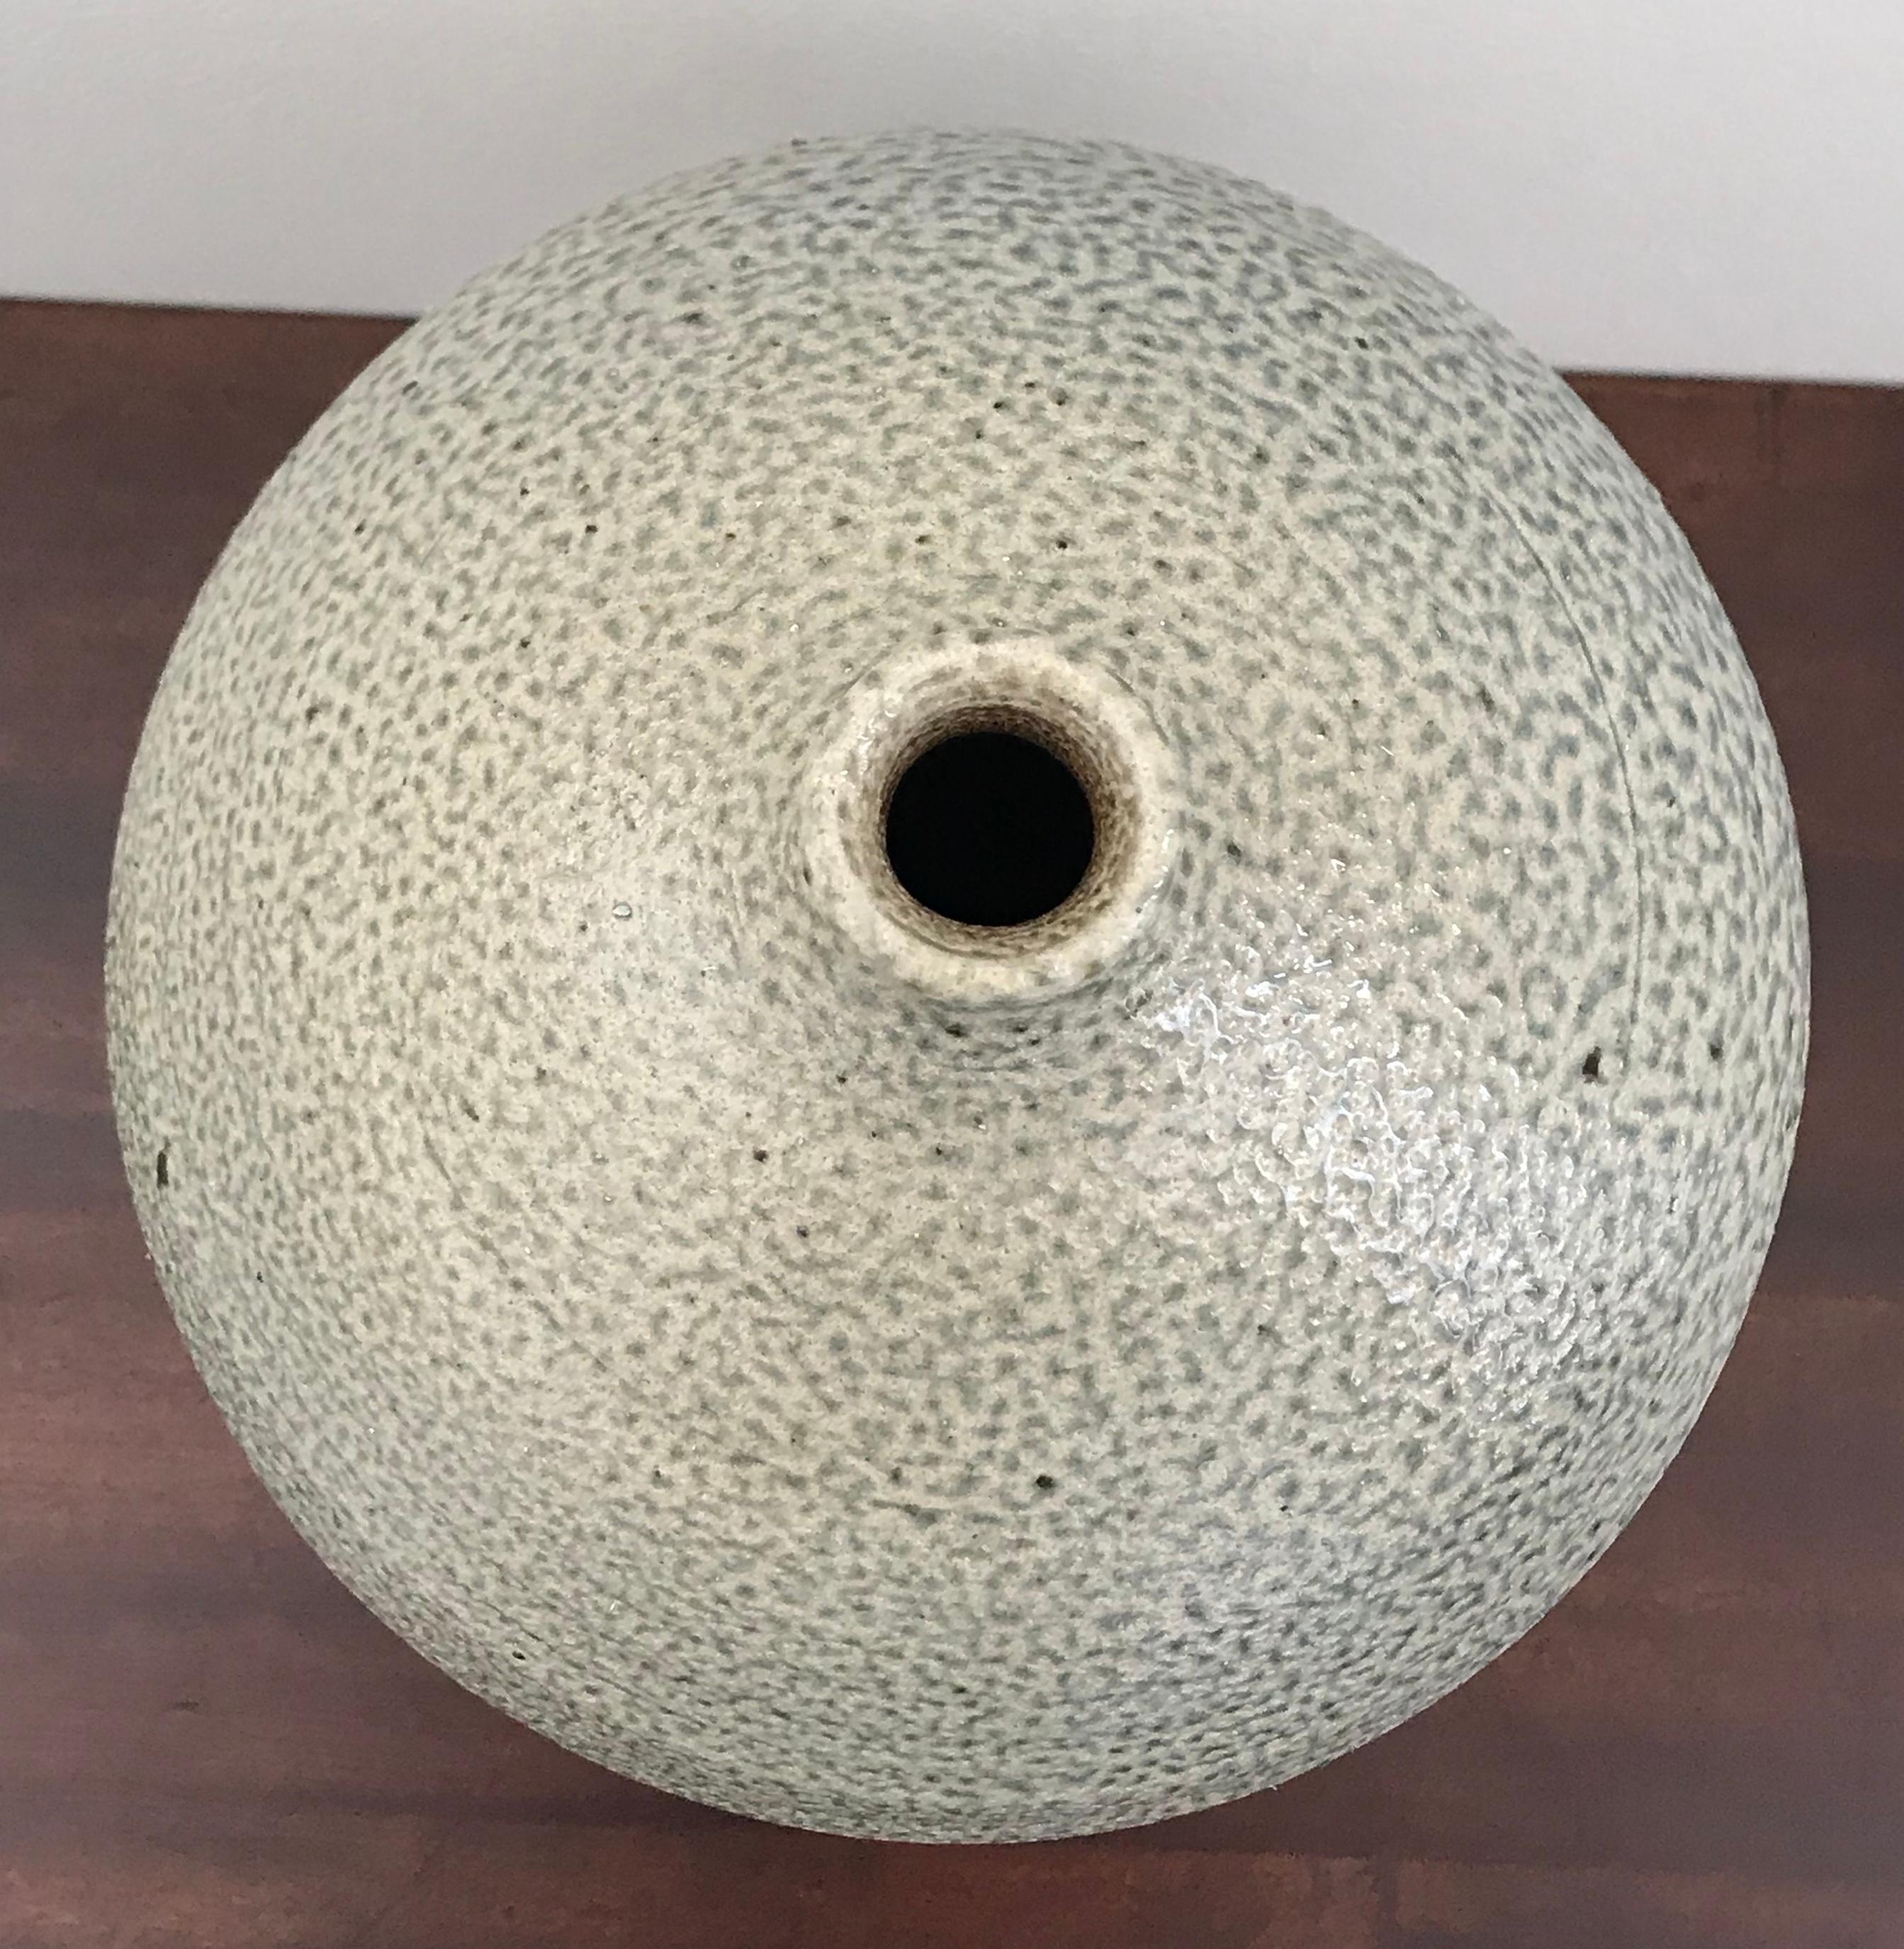 Beautiful earth tone glazed ceramic vase by American artist Michael Kreisberg, late 20th century.